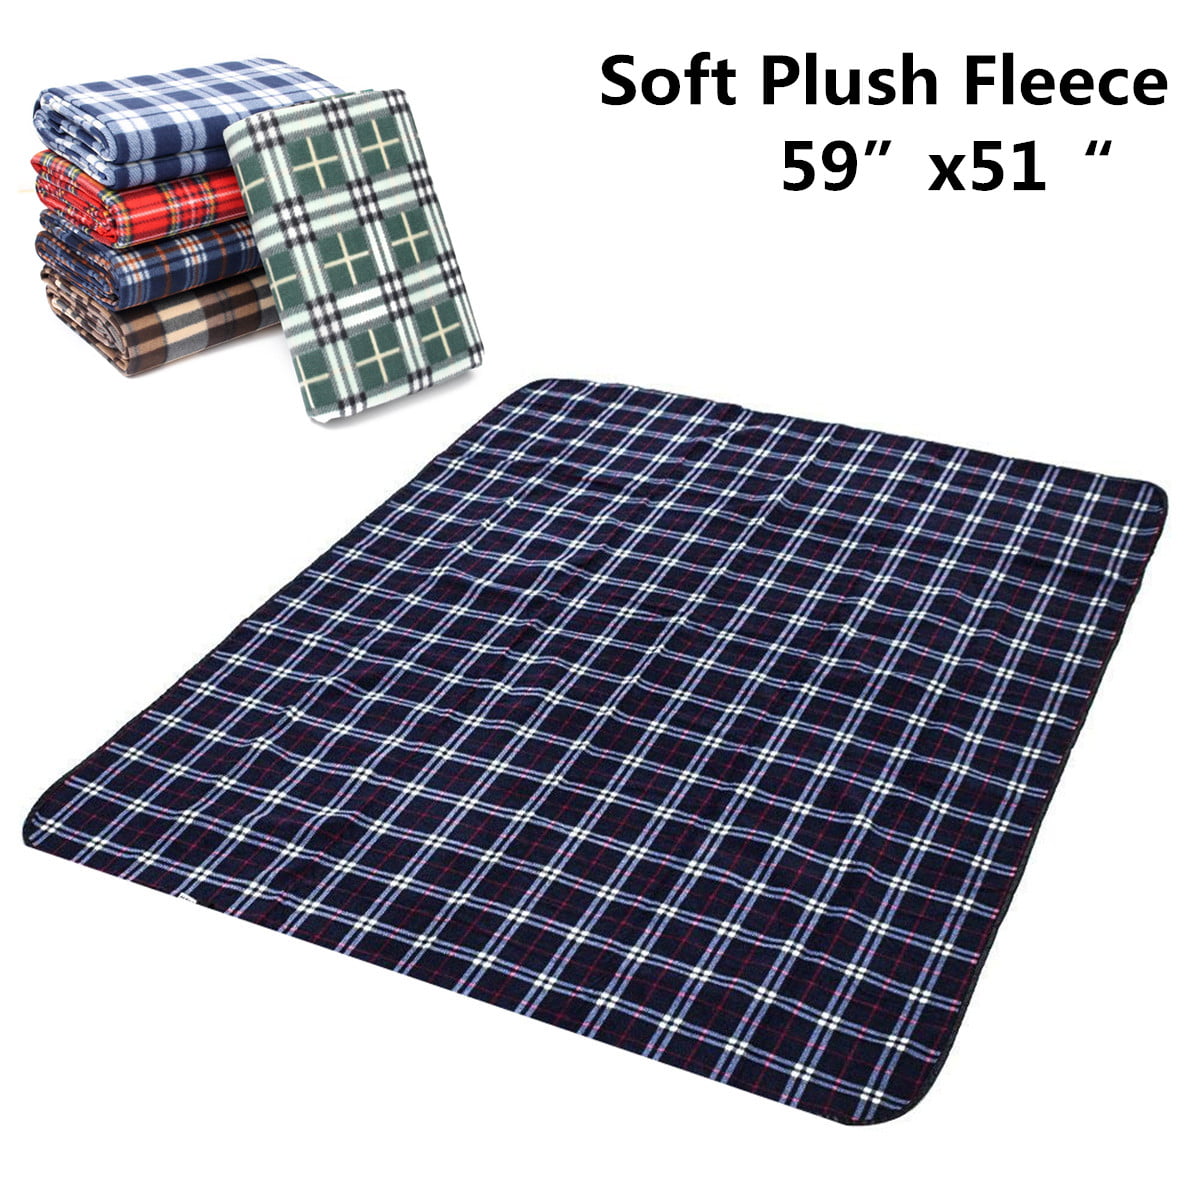 Outdoor Picnic Blanket Machine Washable, Extra Large 59”x51“ Soft 